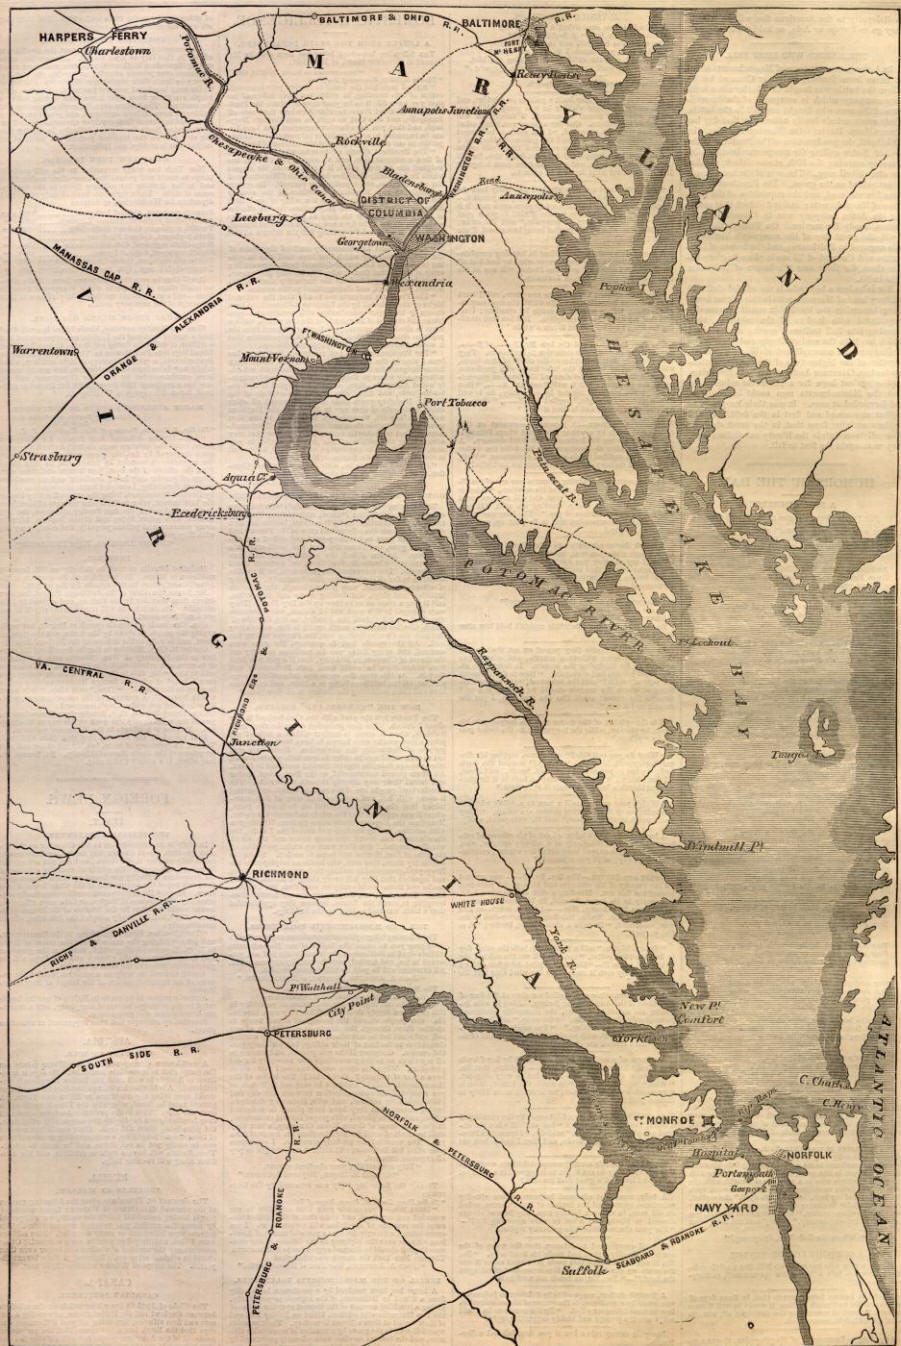 Virginia Battle Map